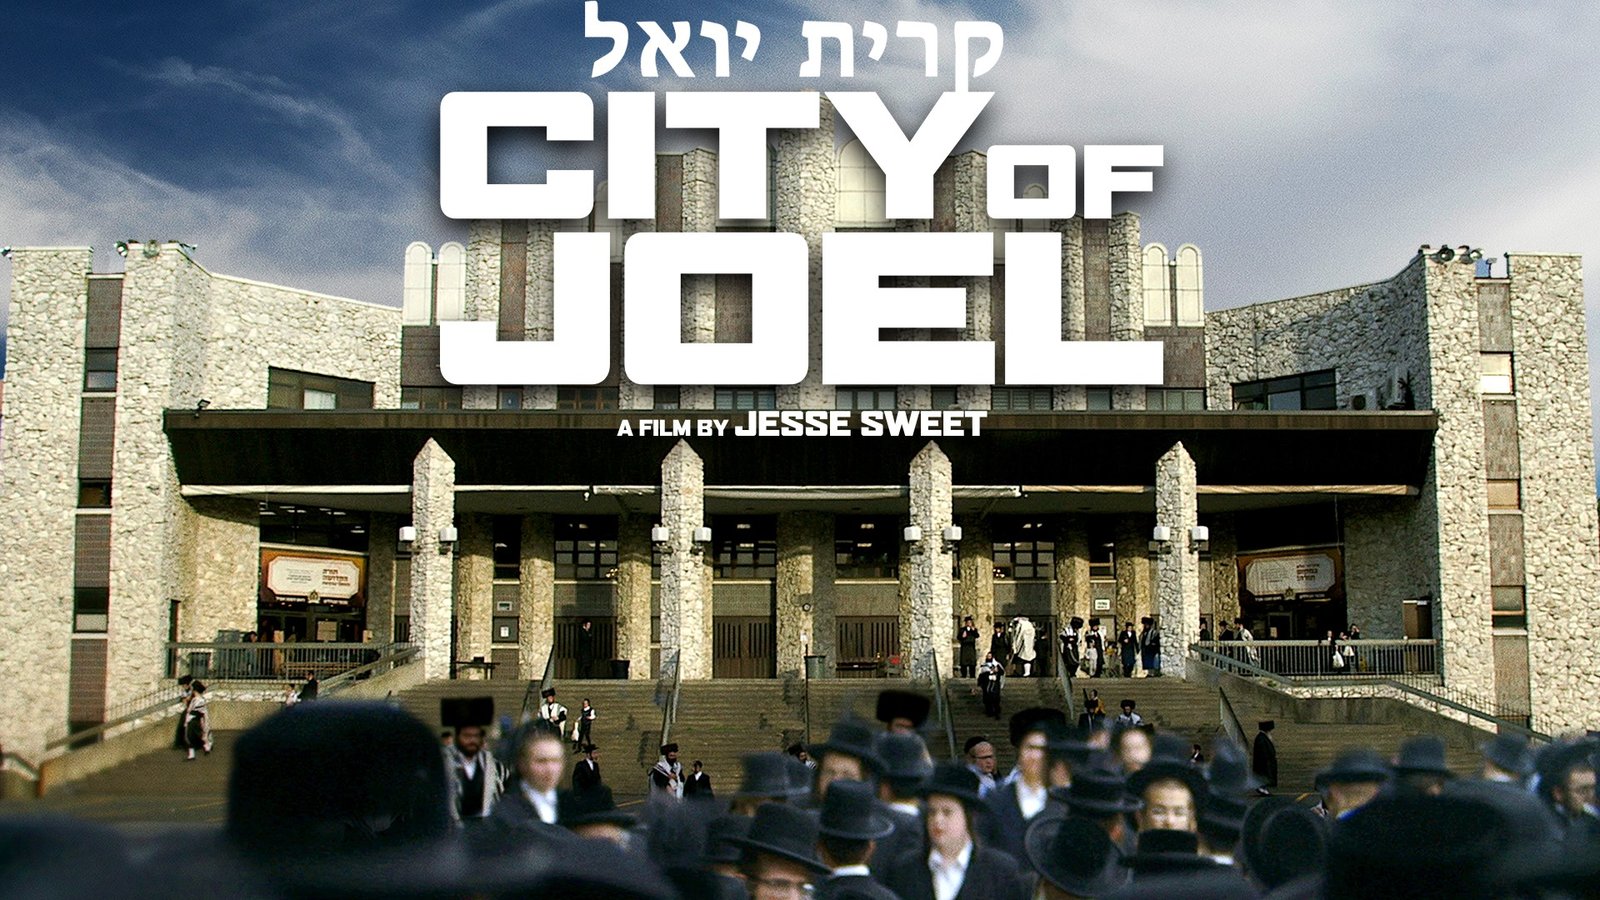 City of Joel